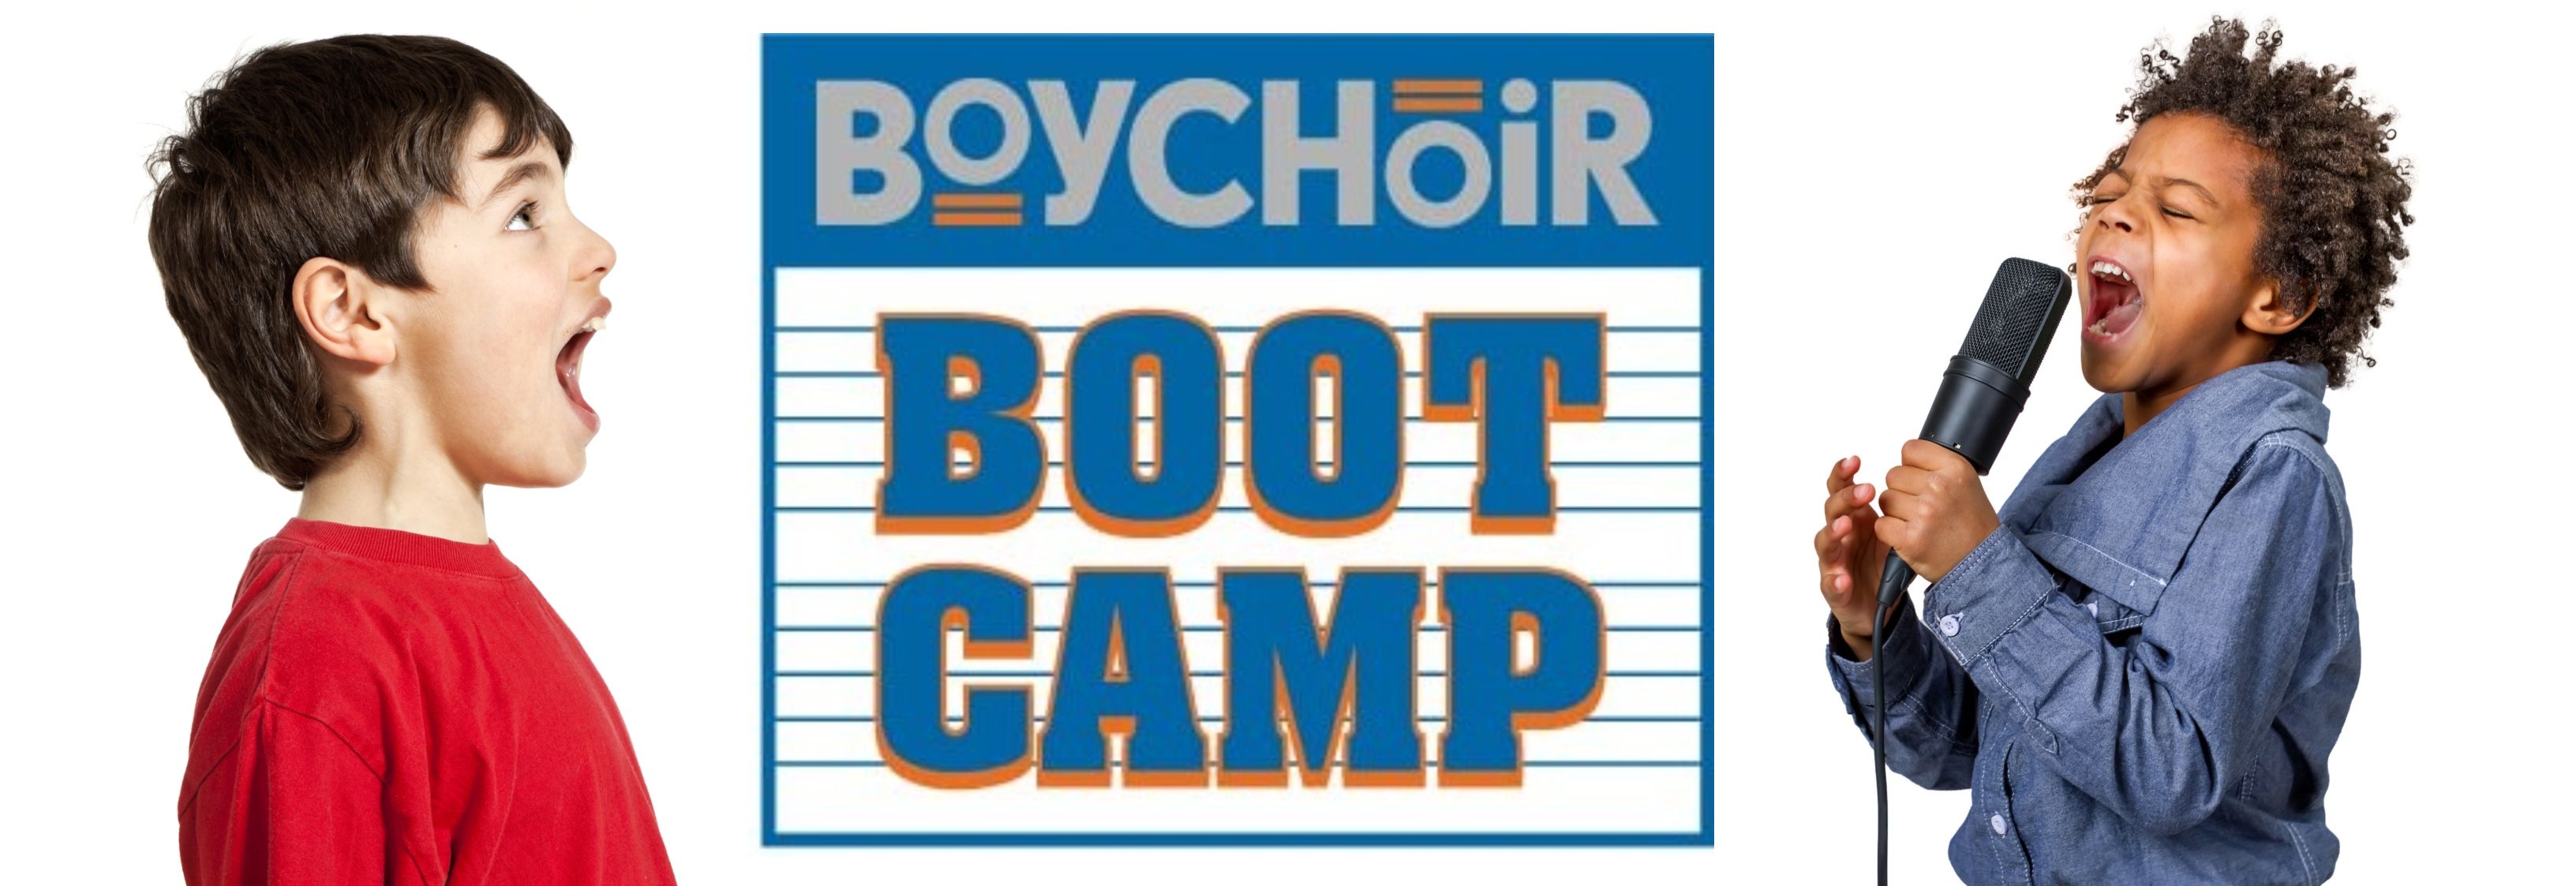 Boychoir Bootcamp